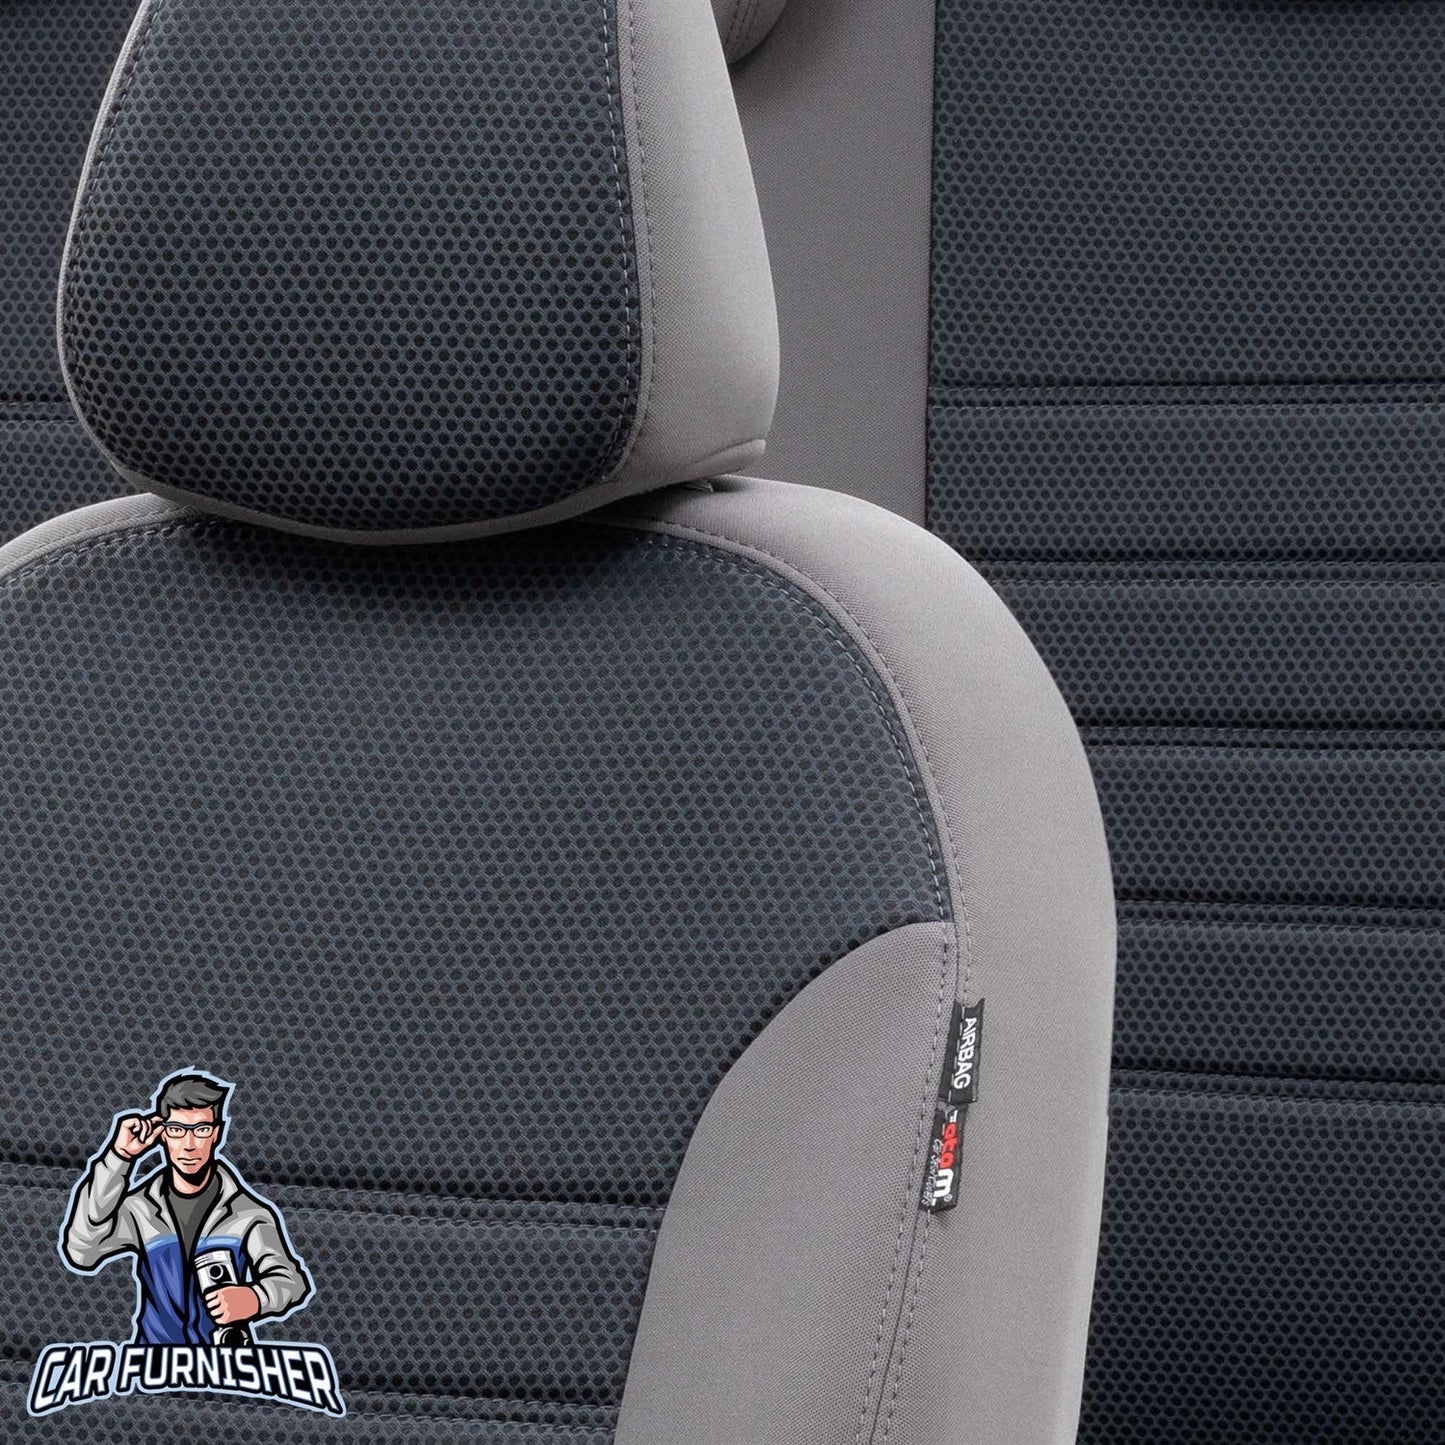 Renault Twingo Seat Cover Original Jacquard Design Smoked Jacquard Fabric